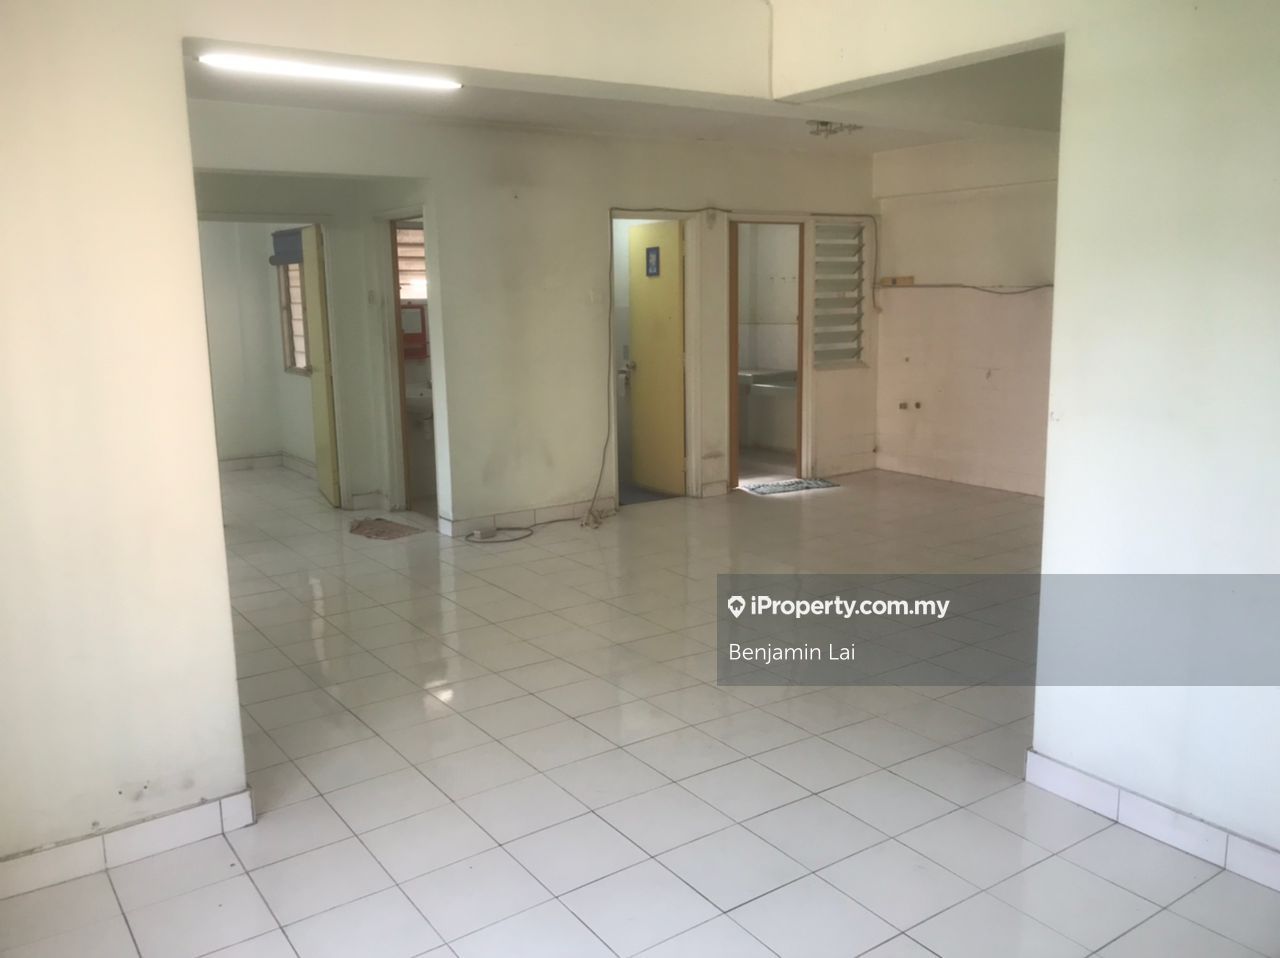 Aman Dua Apartment 3 bedrooms for sale in Kepong, Selangor | iProperty ...